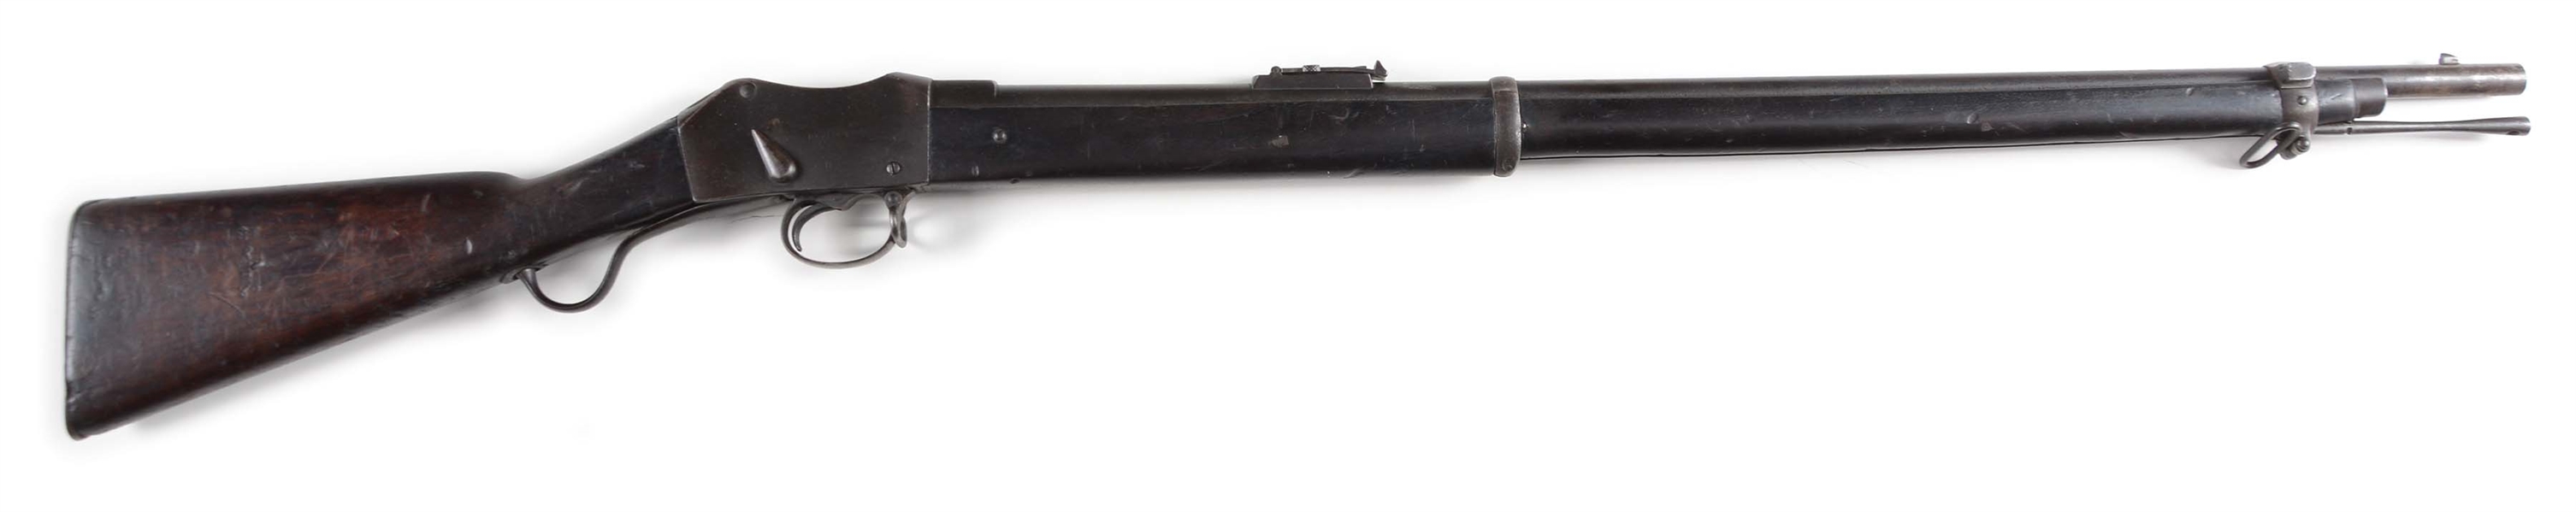 (A) ENFIELD MARTINI MK II SINGLE-SHOT RIFLE (1878).